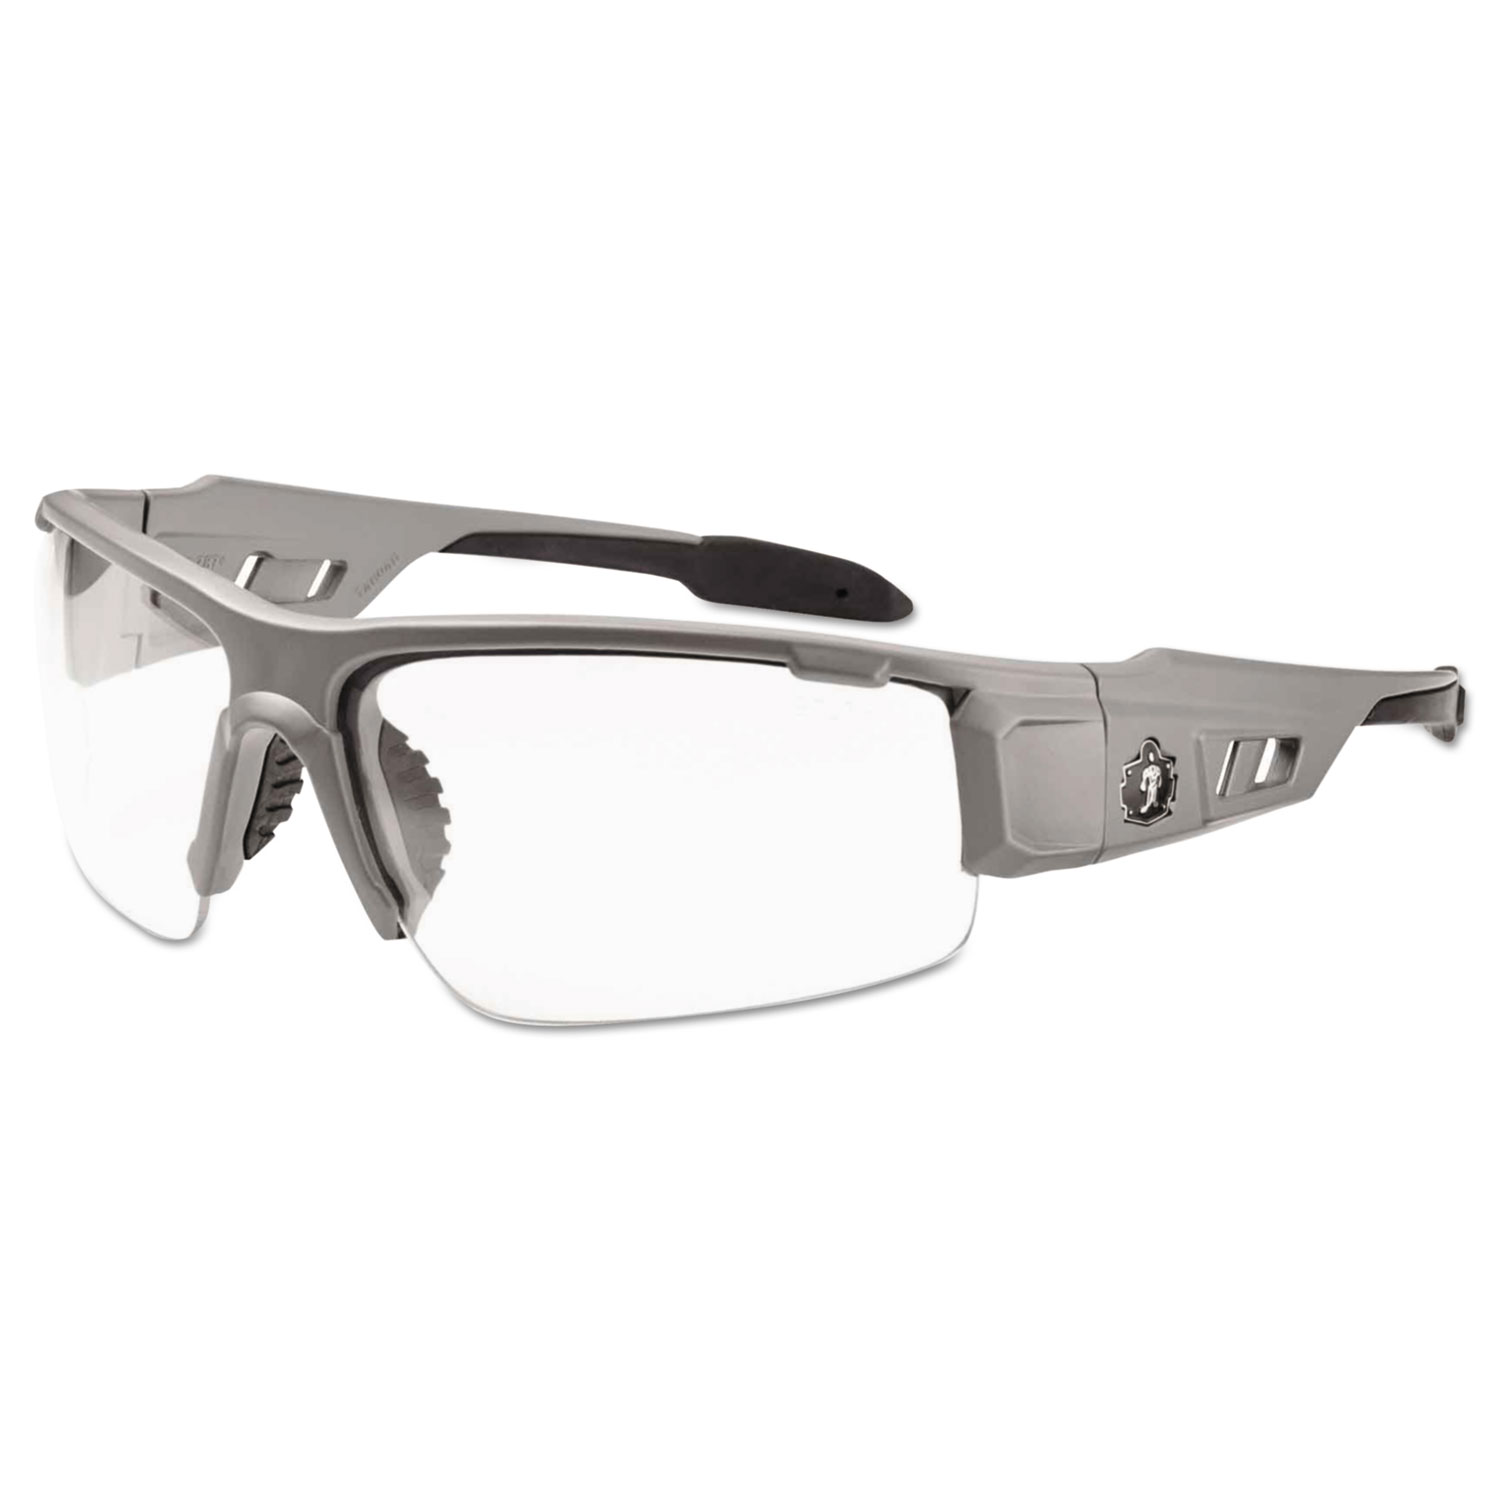  ergodyne 52100 Skullerz Dagr Safety Glasses, Matte Gray Frame/Clear Lens, Nylon/Polycarb (EGO52100) 